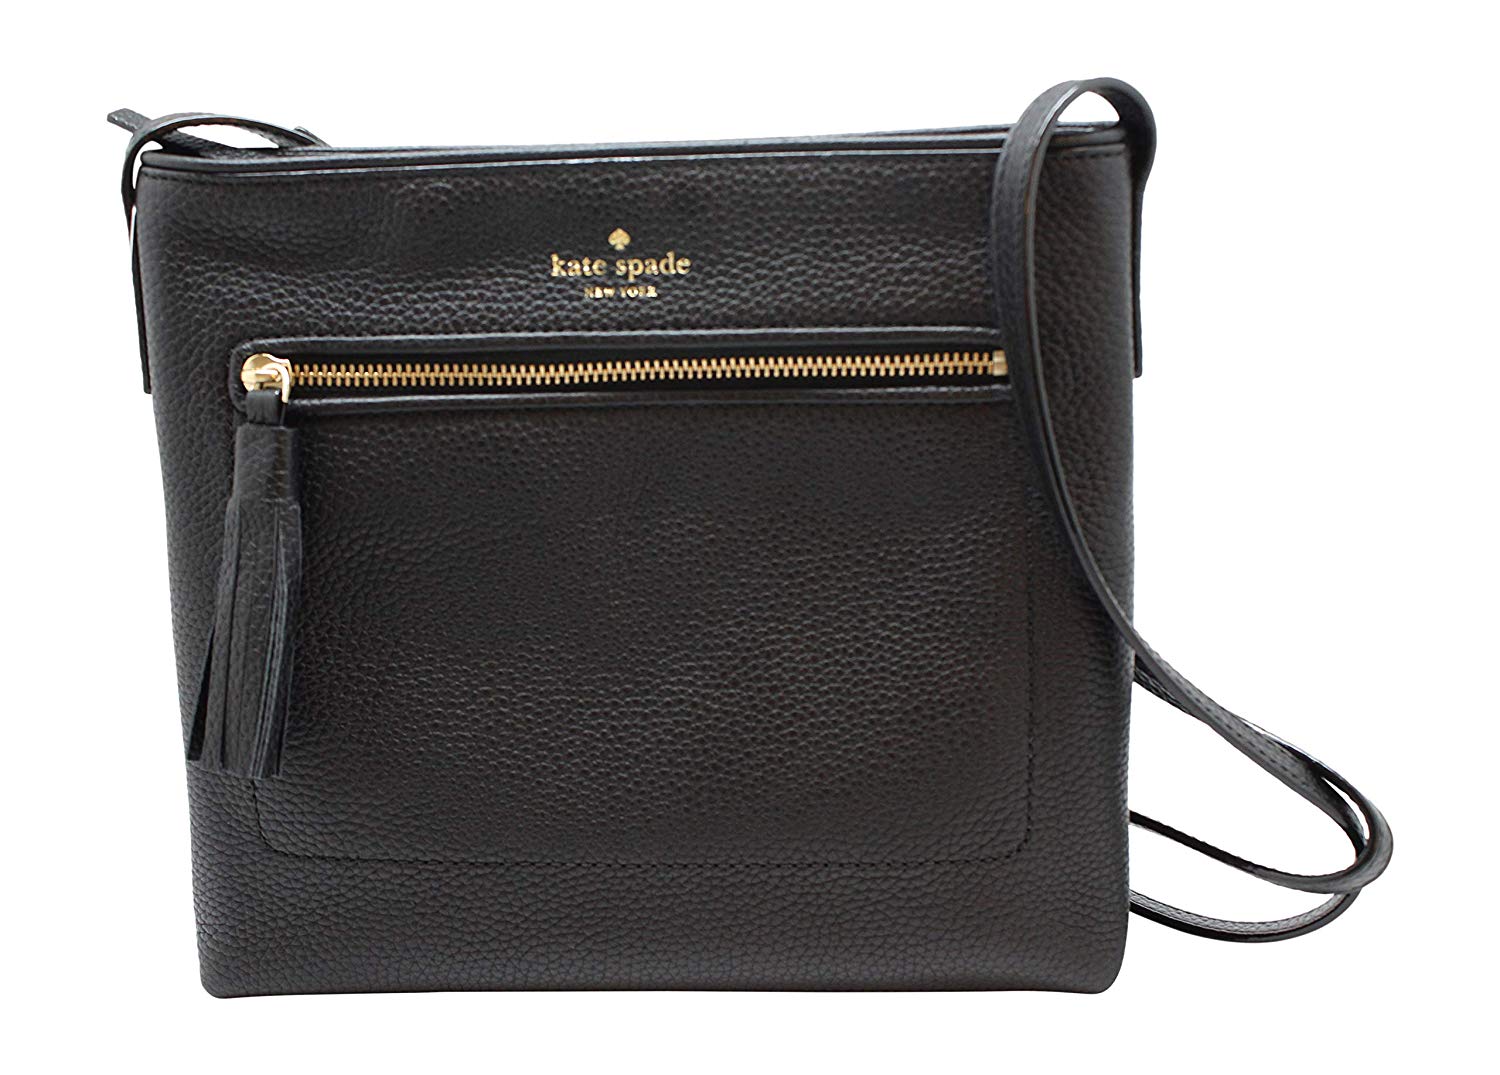 Review of Kate Spade New York Chester Street Dessi Pebbled Leather Shoulder Bag